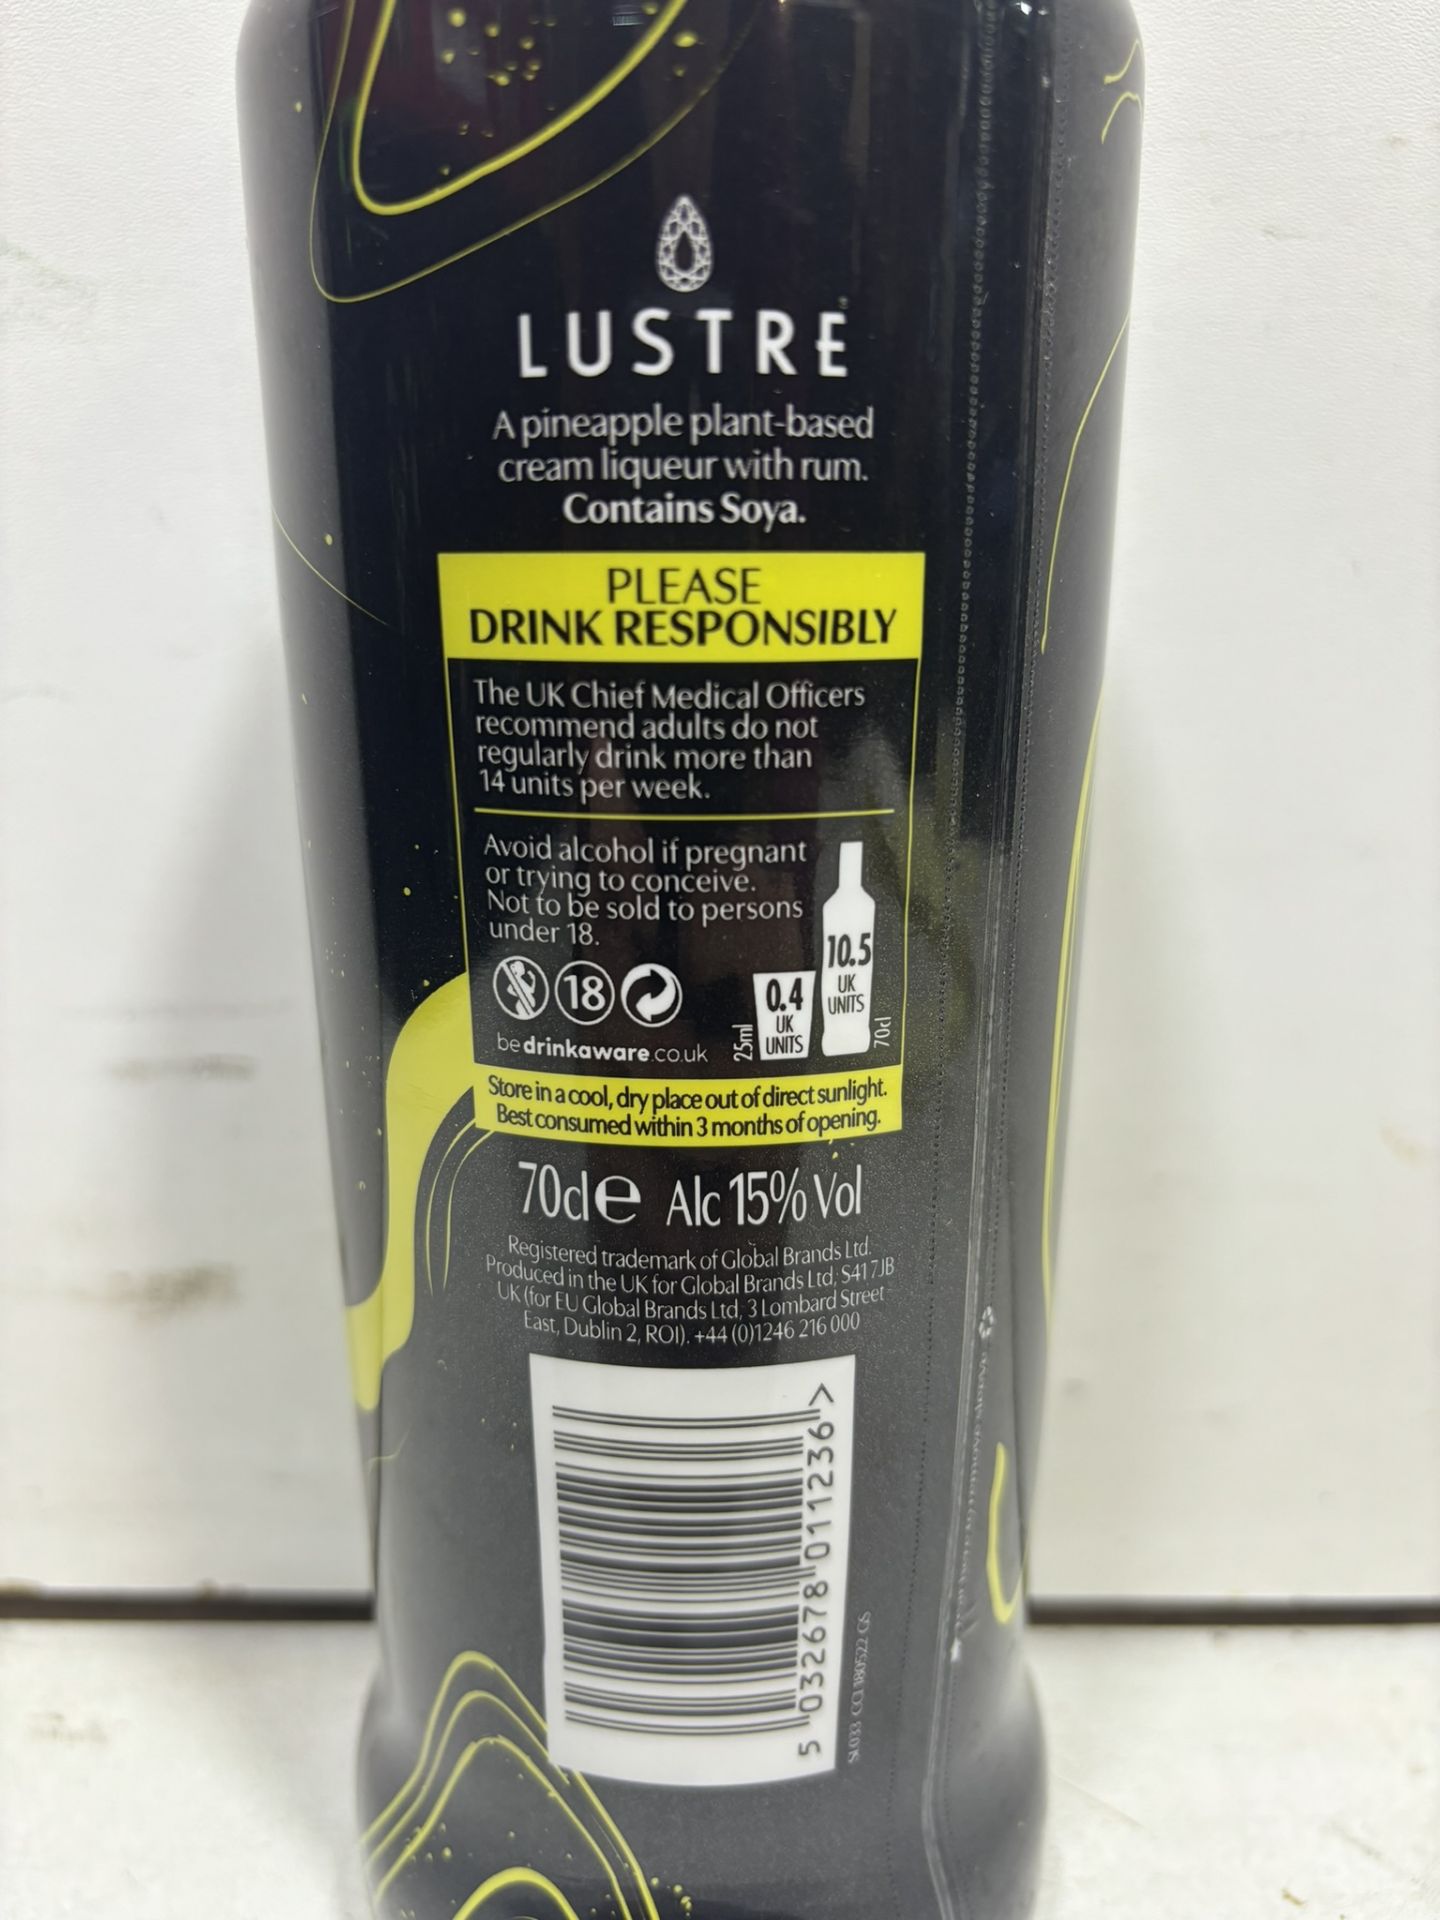 8 X Bottles Of Lustre Pineapple Cream Rum Liqueur 70Cl - Image 3 of 4